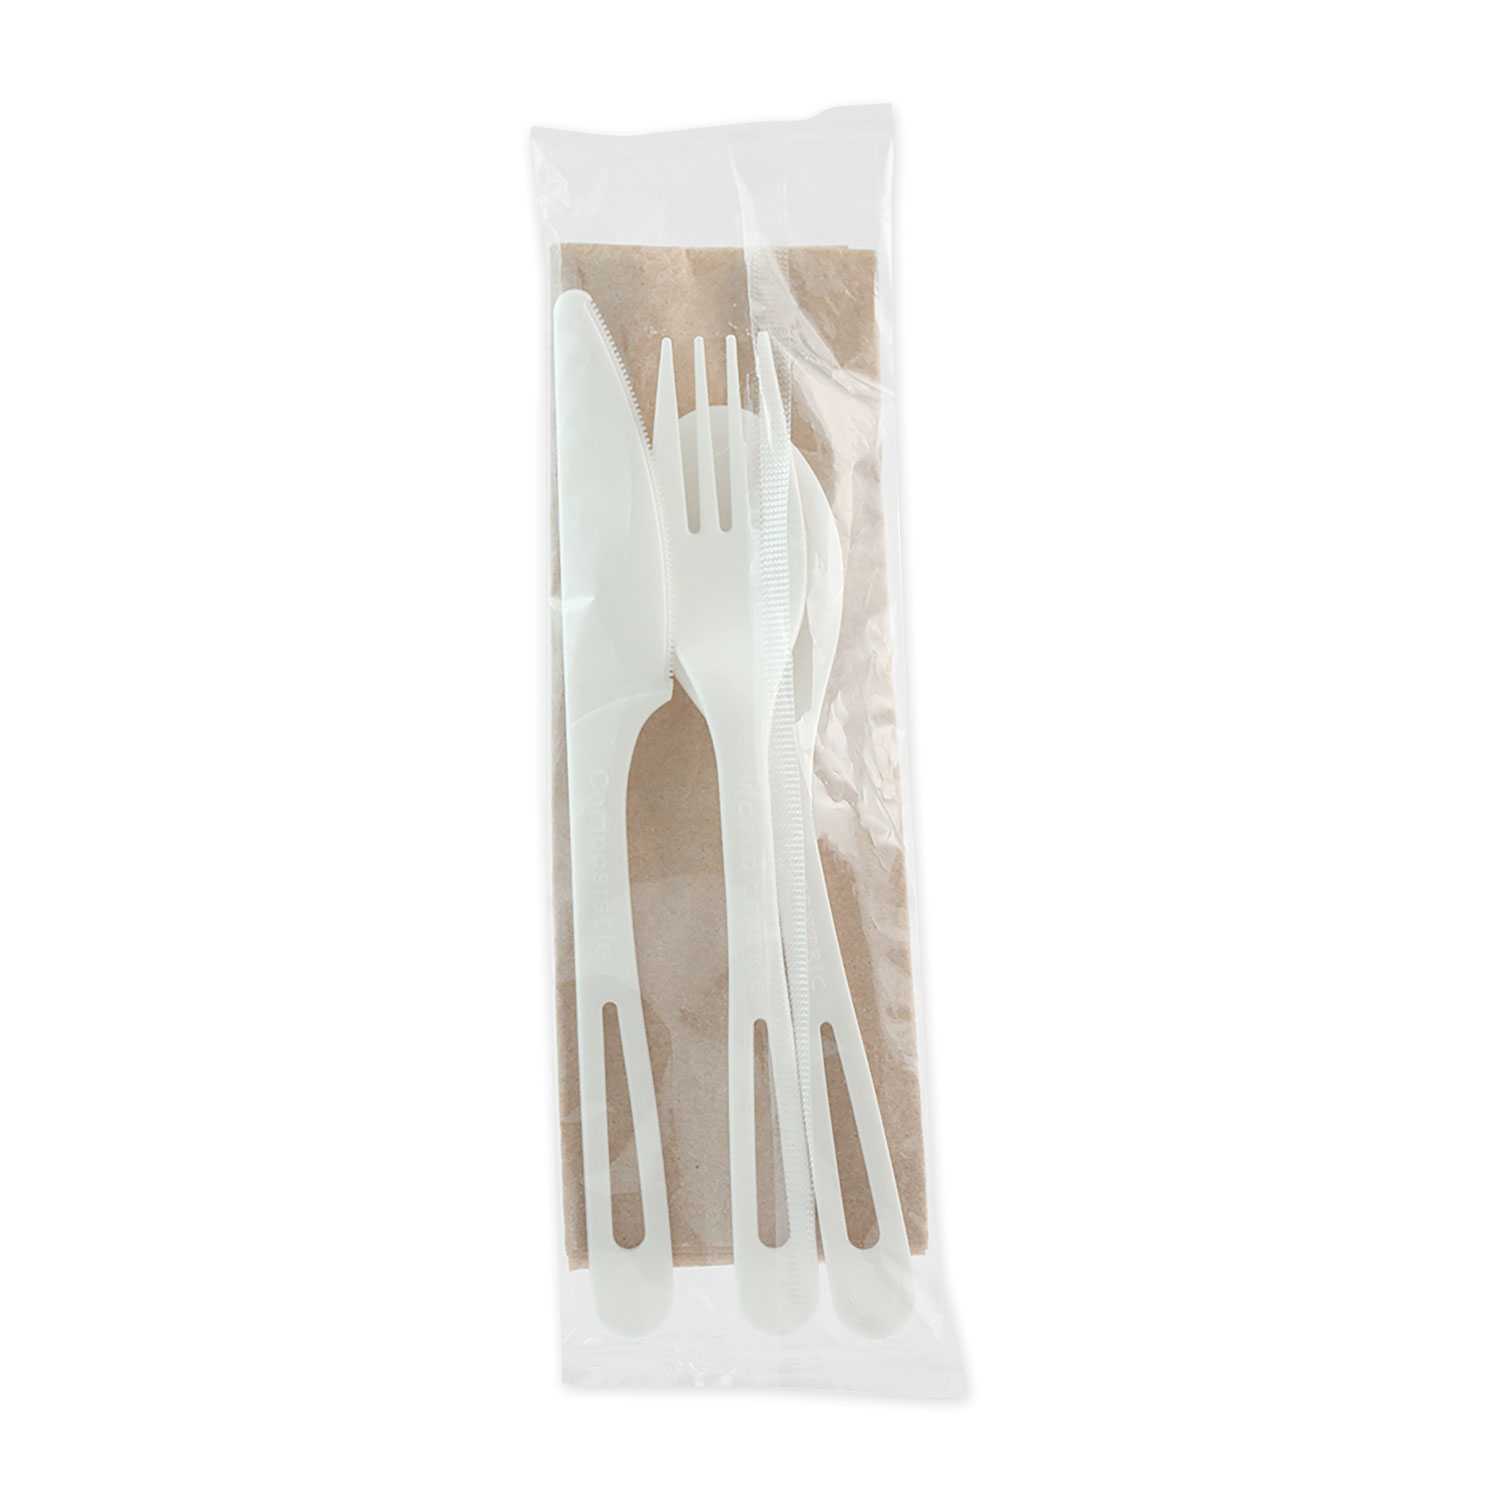  World Centric ASPSTN TPLA Compostable Cutlery, Knife/Fork/Spoon/Napkin, 6, White, 250/Carton (WORASPSTN) 